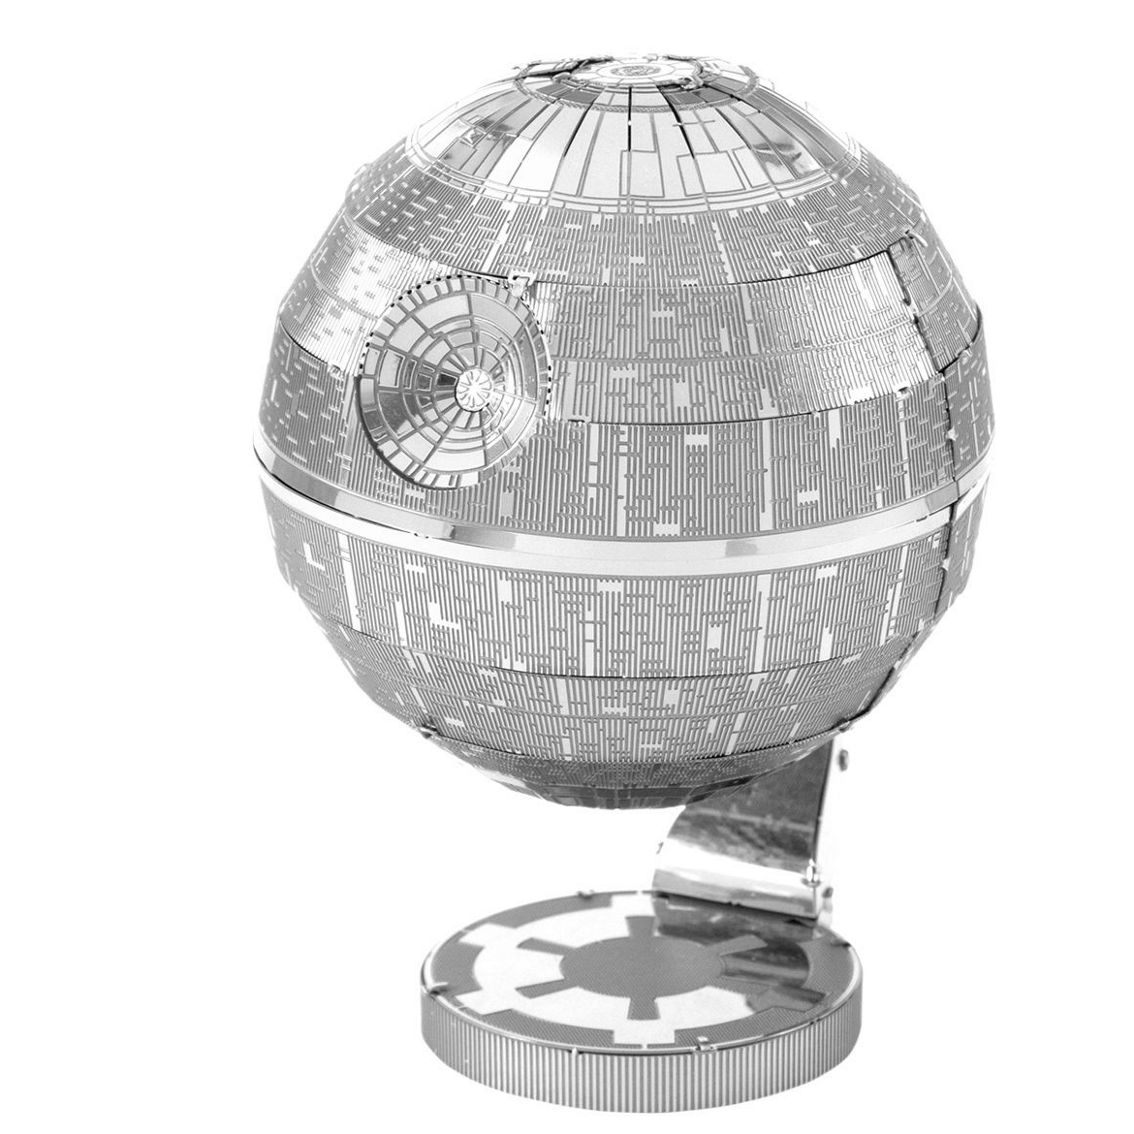 Fascinations Metal Earth 3D Metal Model Kit - Star Wars Death Star - Image 2 of 2